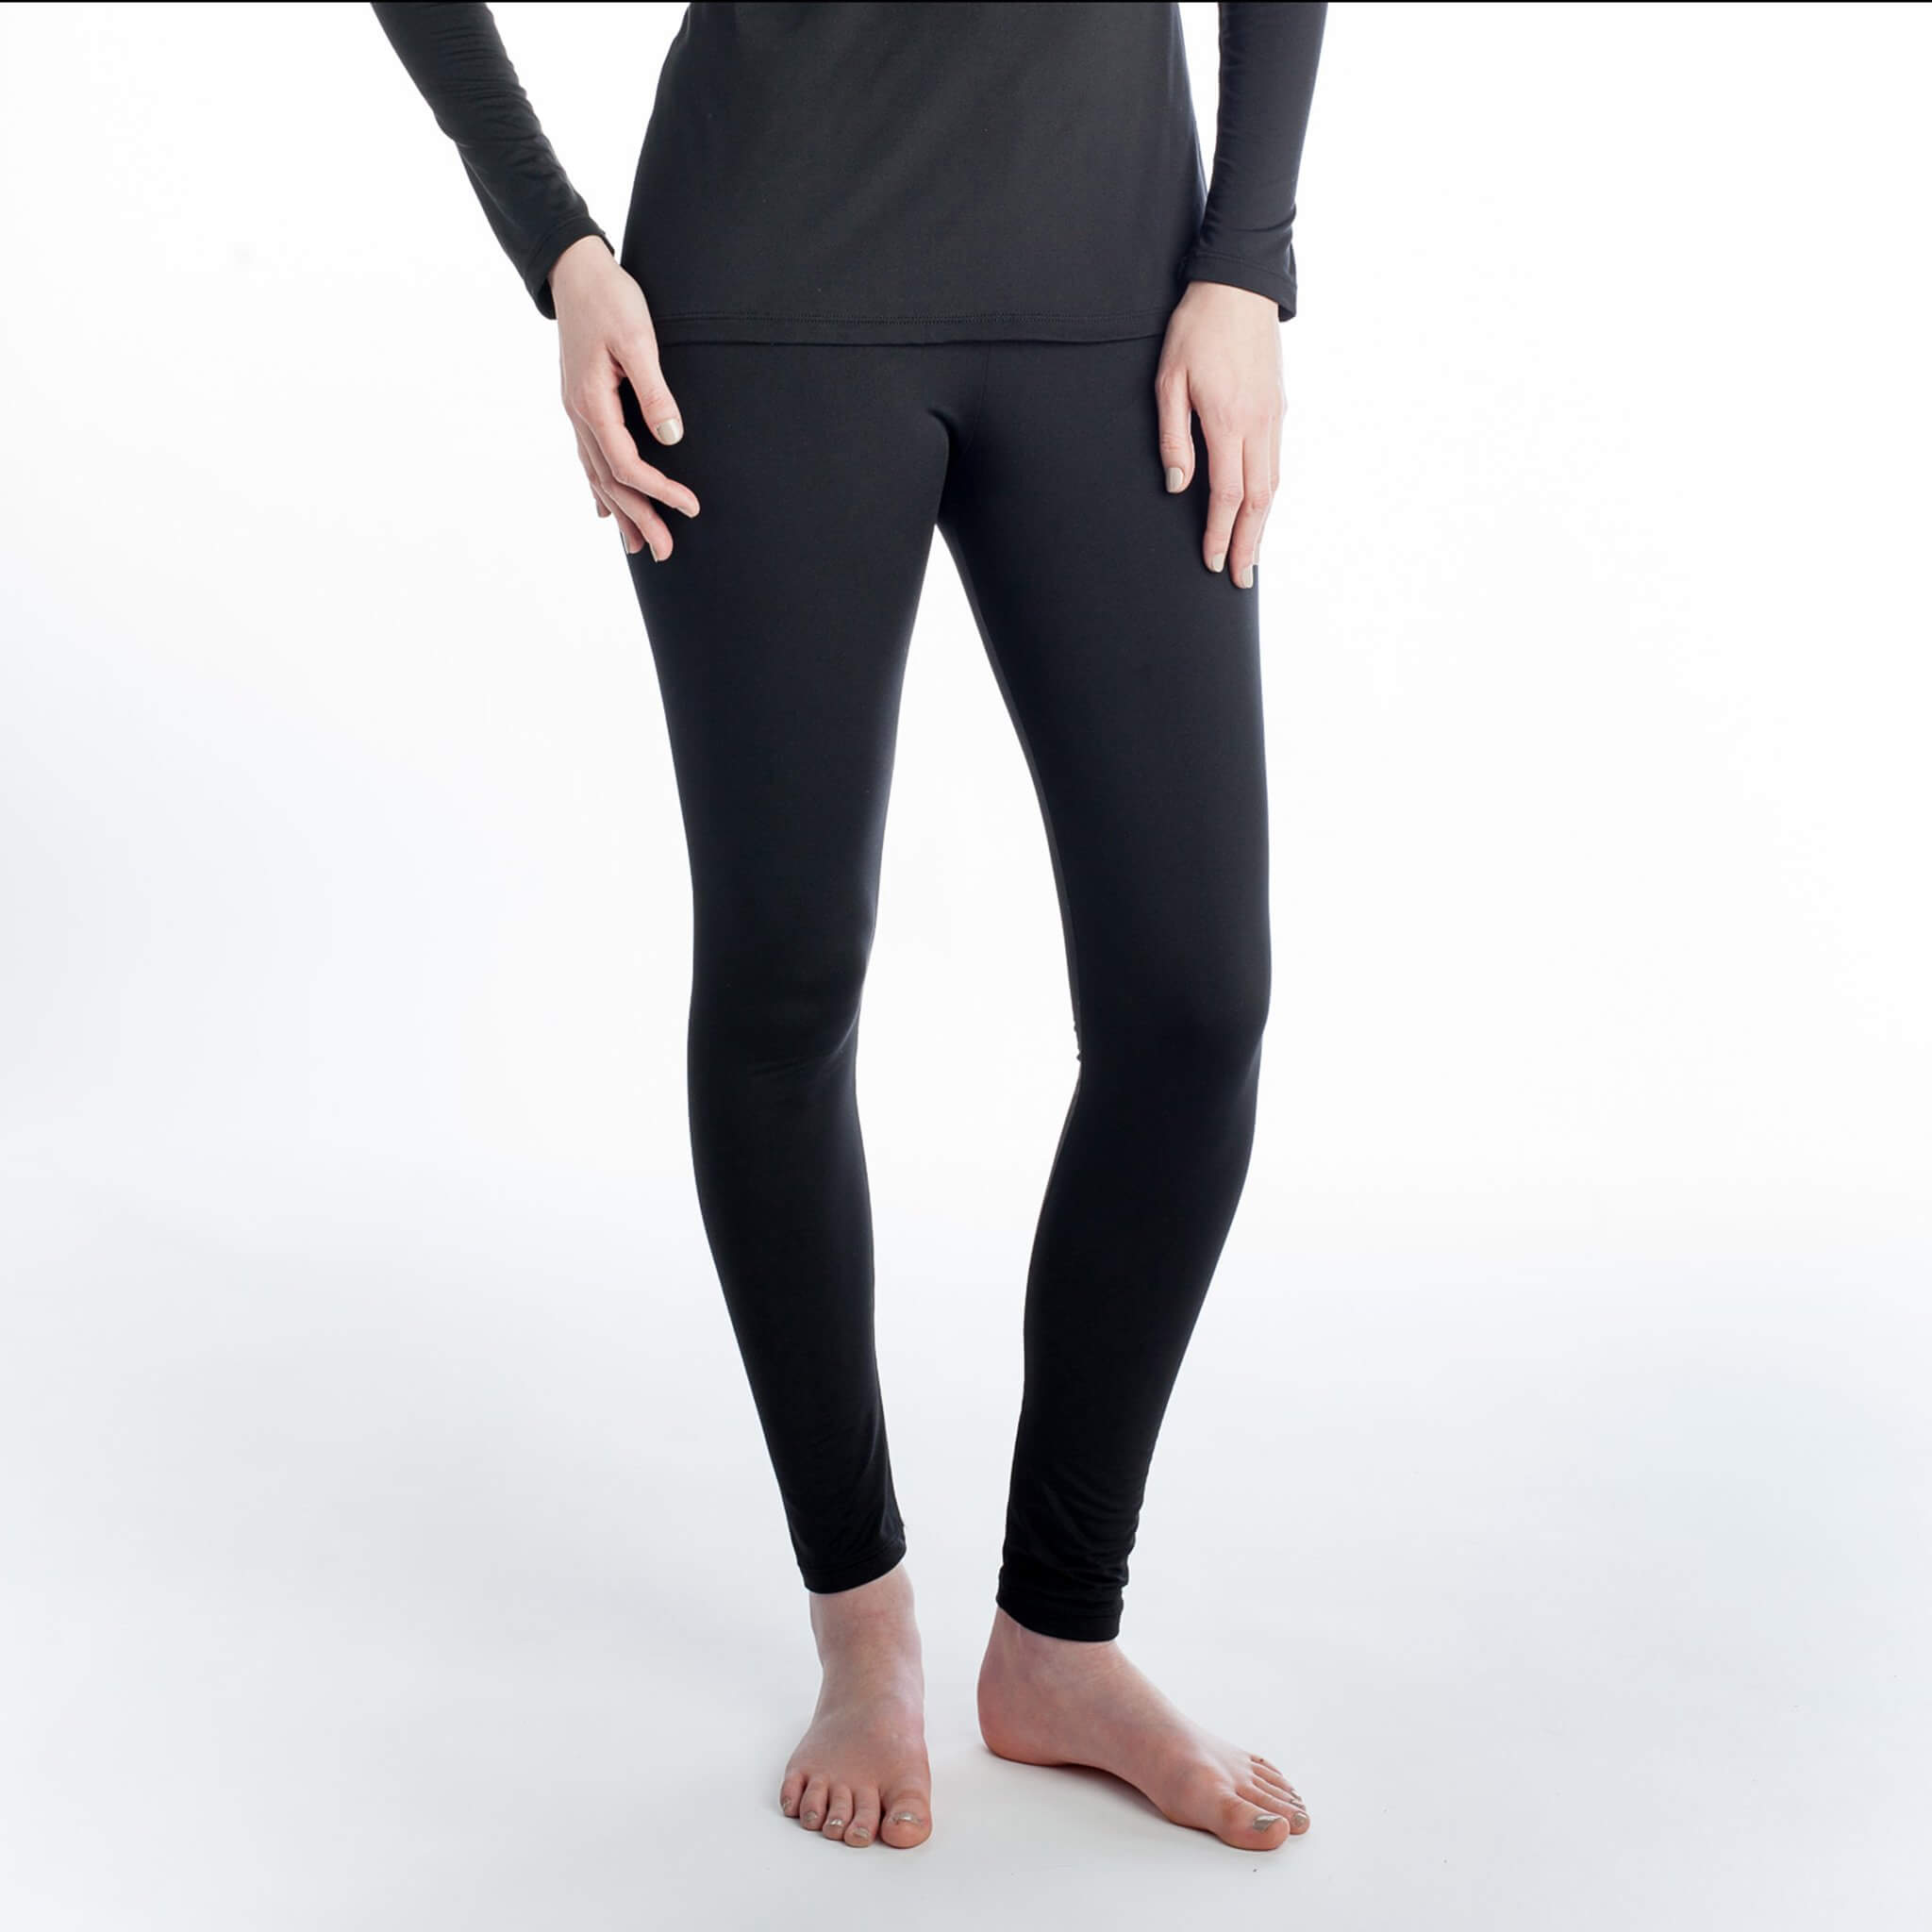 Merino Wool Blend Women's Thermal Underwear Base Layer Leggings Bottoms in  Black